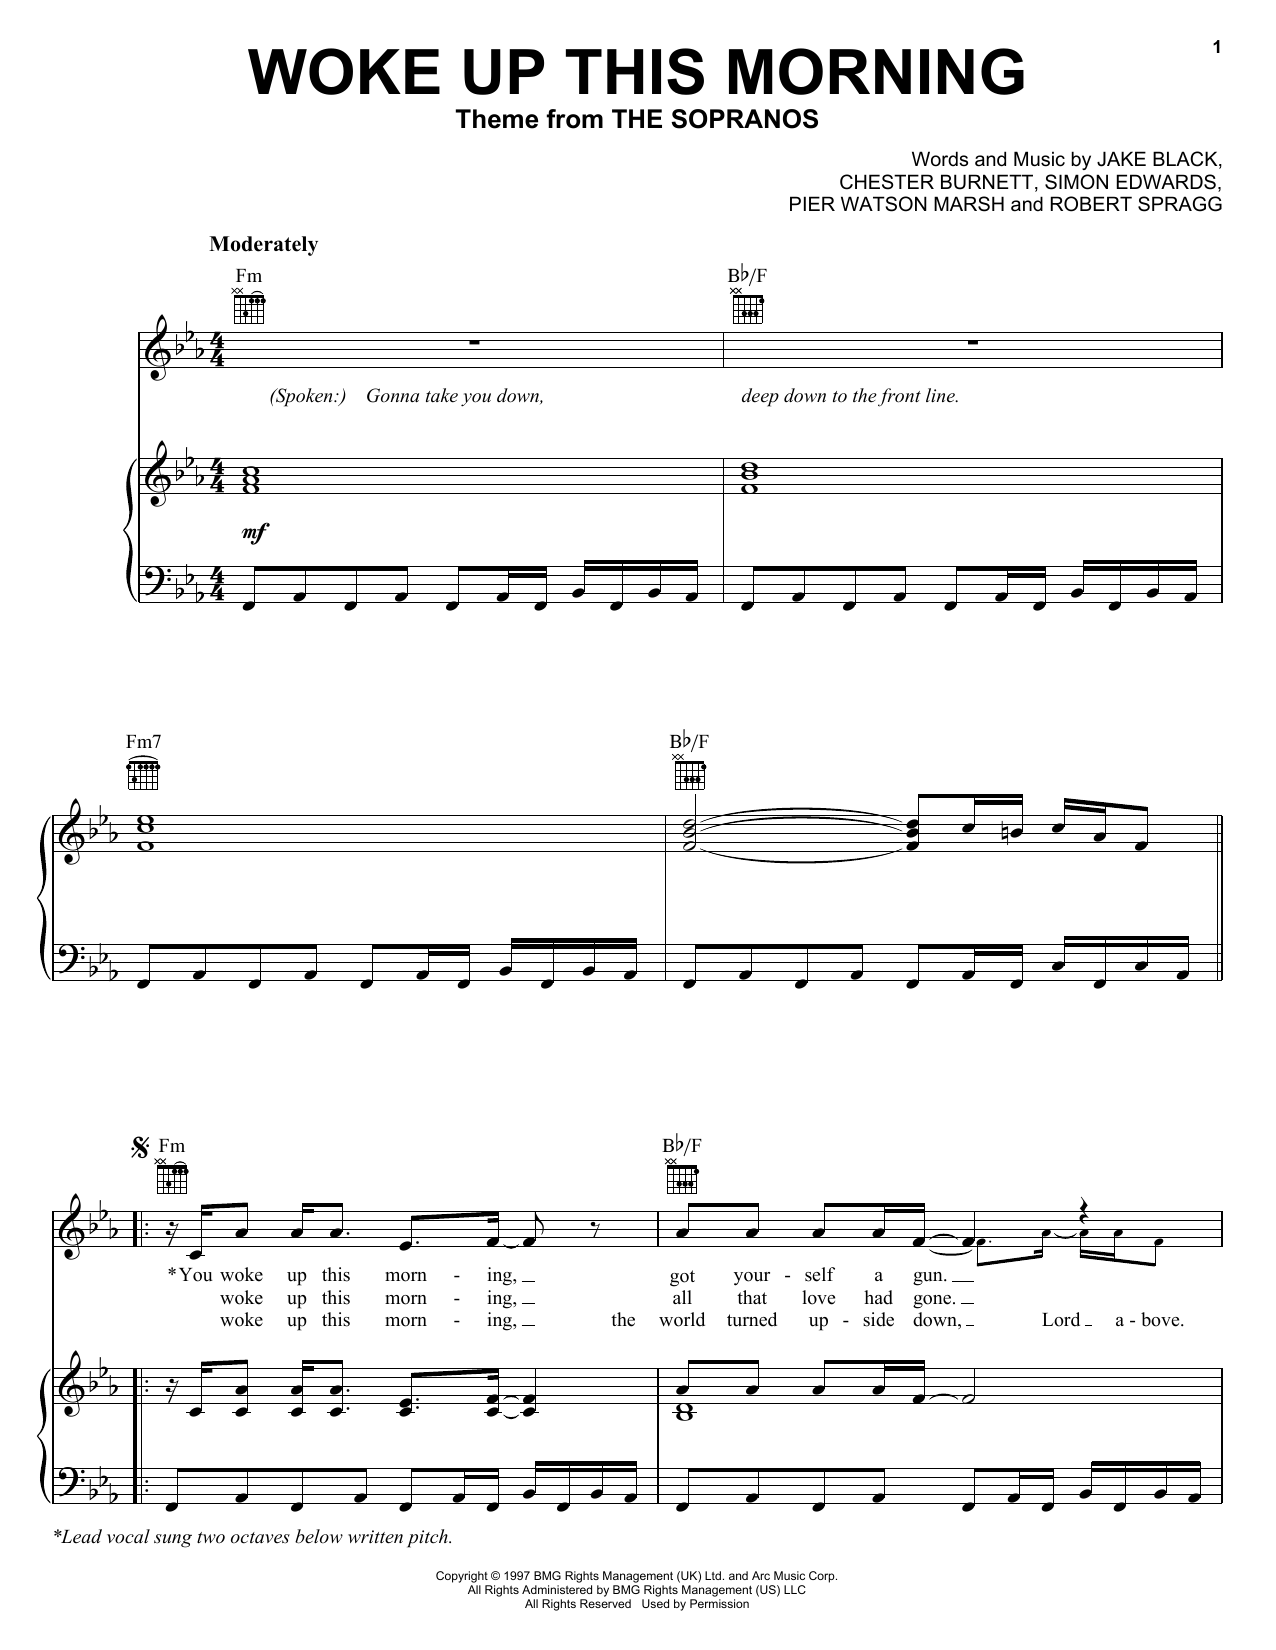 Alabama 3 Woke Up This Morning (Theme from The Sopranos) Sheet Music Notes & Chords for Lyrics & Chords - Download or Print PDF